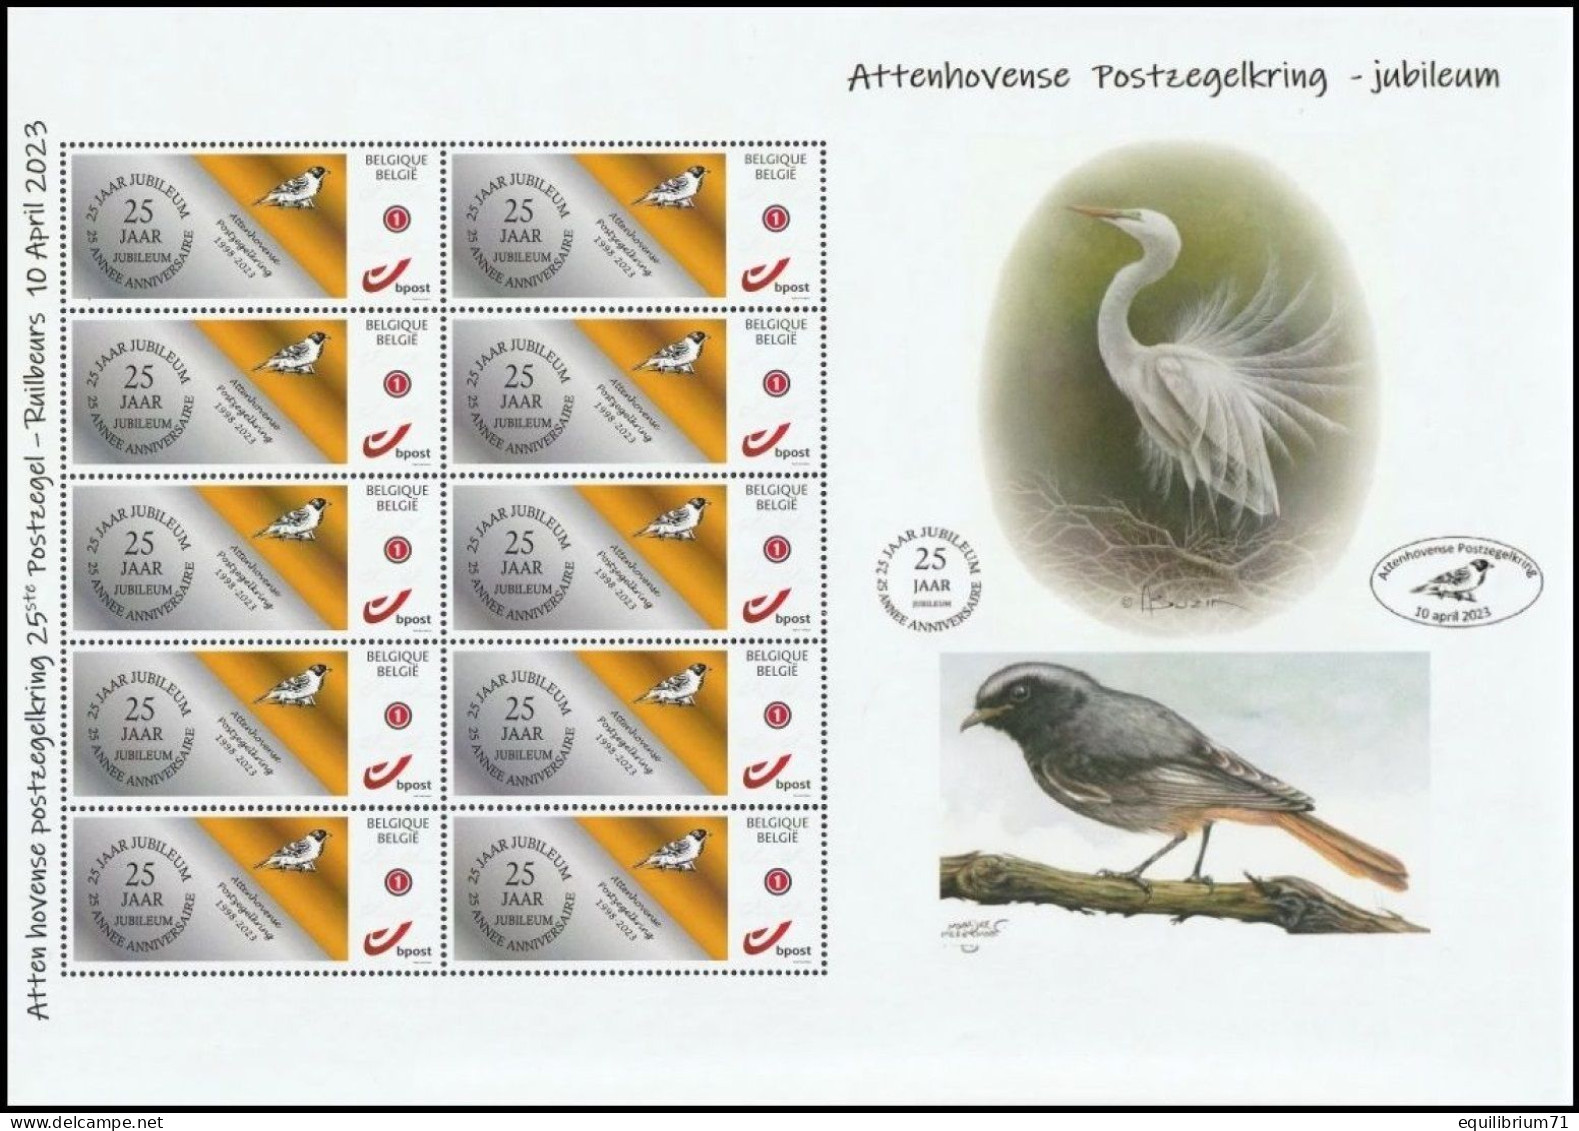 DUOSTAMP/MYSTAMP** - Cercle D'Ottoncourt / Attenhovense Postzegelkring - 1998-2023 - 25 Ans/jaar/jahre - Jubileum - RRR - Storks & Long-legged Wading Birds